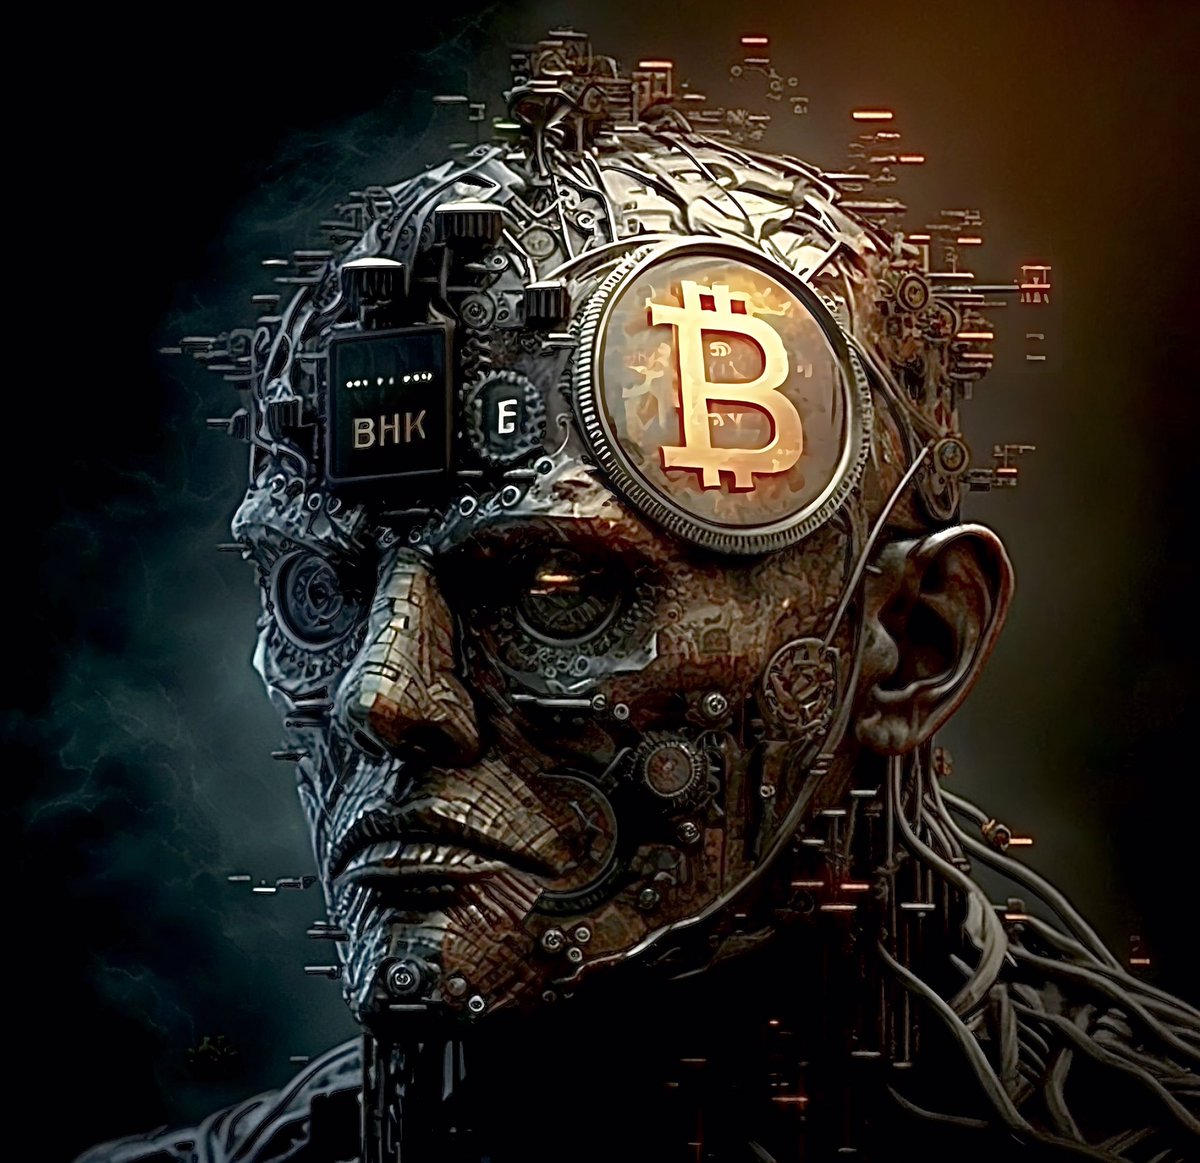 “Where is my mind? #Bitcoin” -@ronin21btc